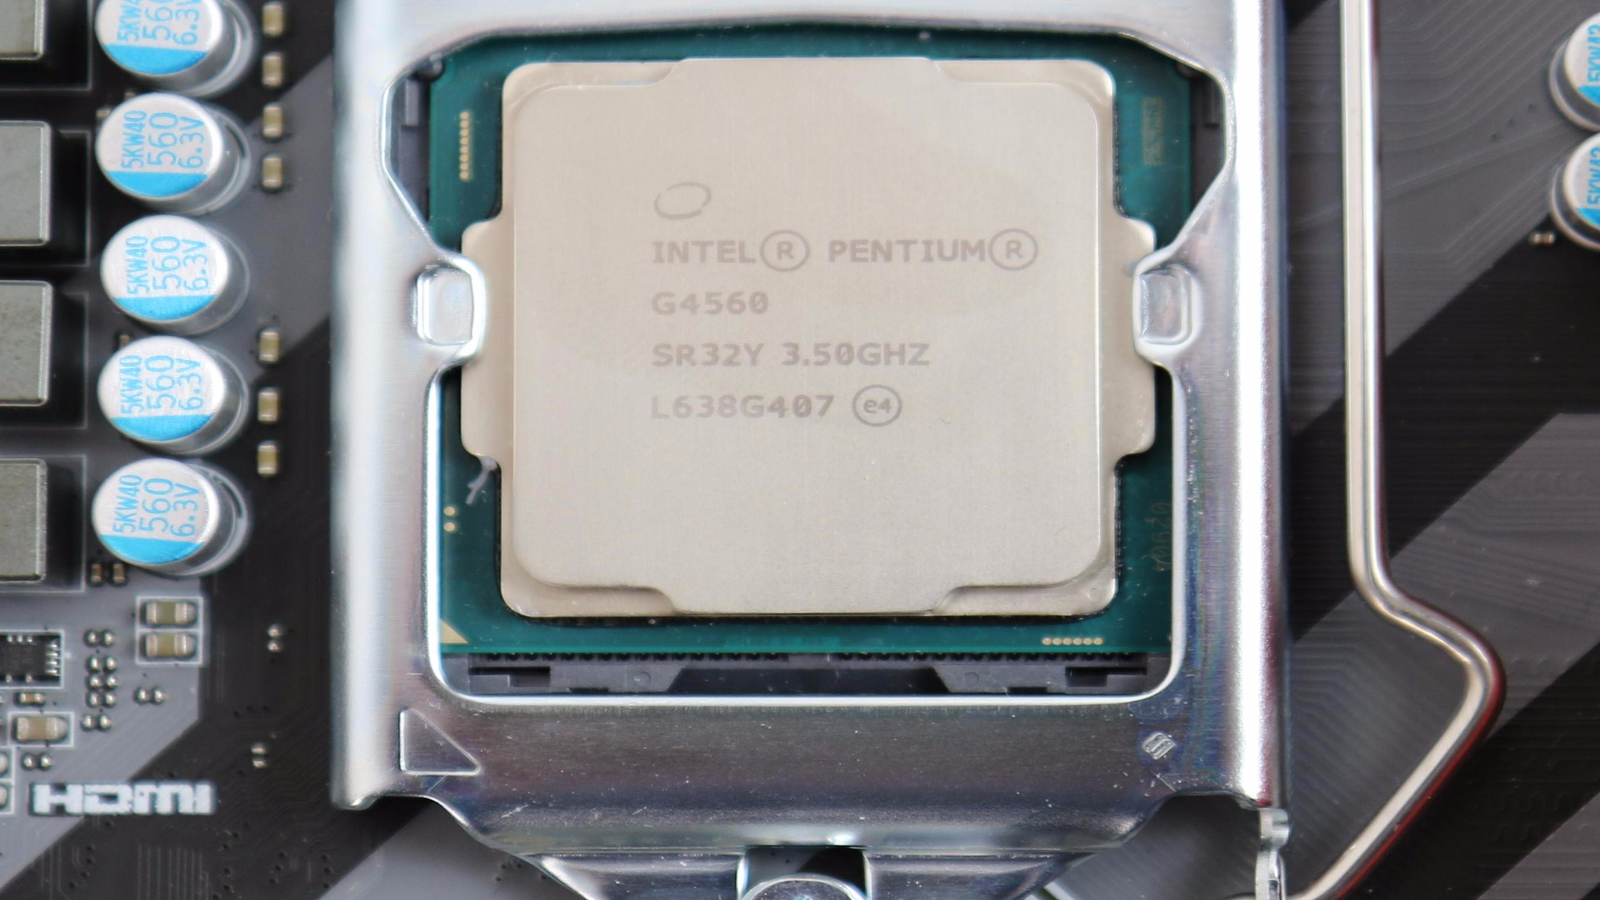 Intel G4560 ultimate budget CPU? Eurogamer.net